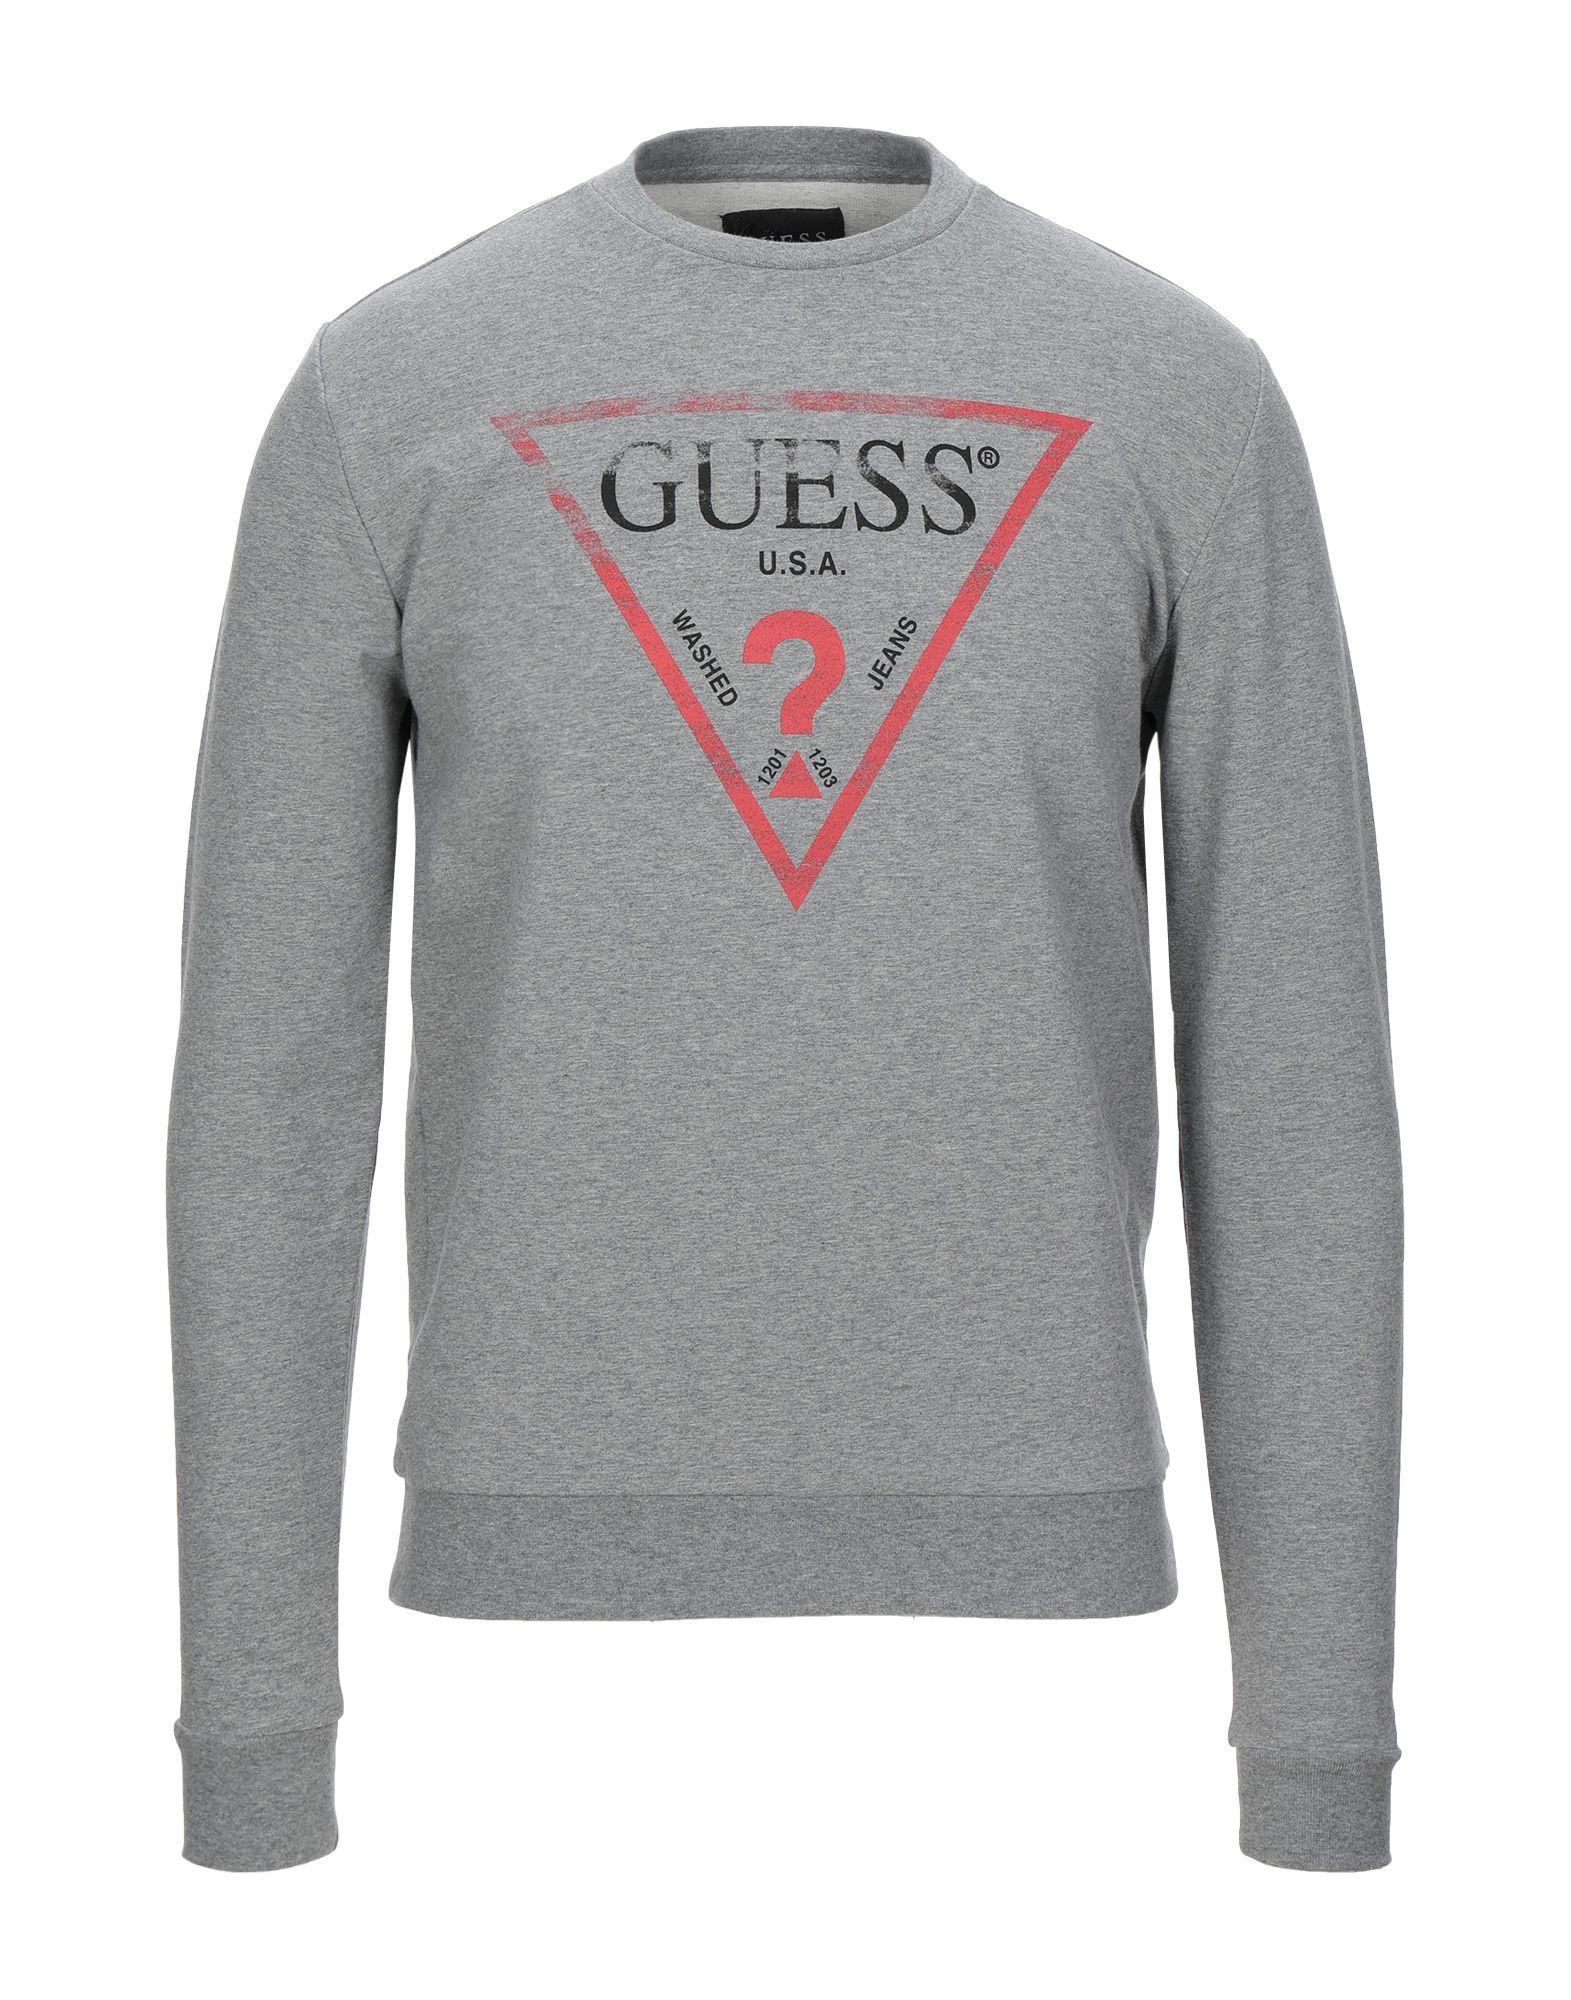 Guess Cotton Sweatshirt in Light Grey (Gray) for Men - Lyst